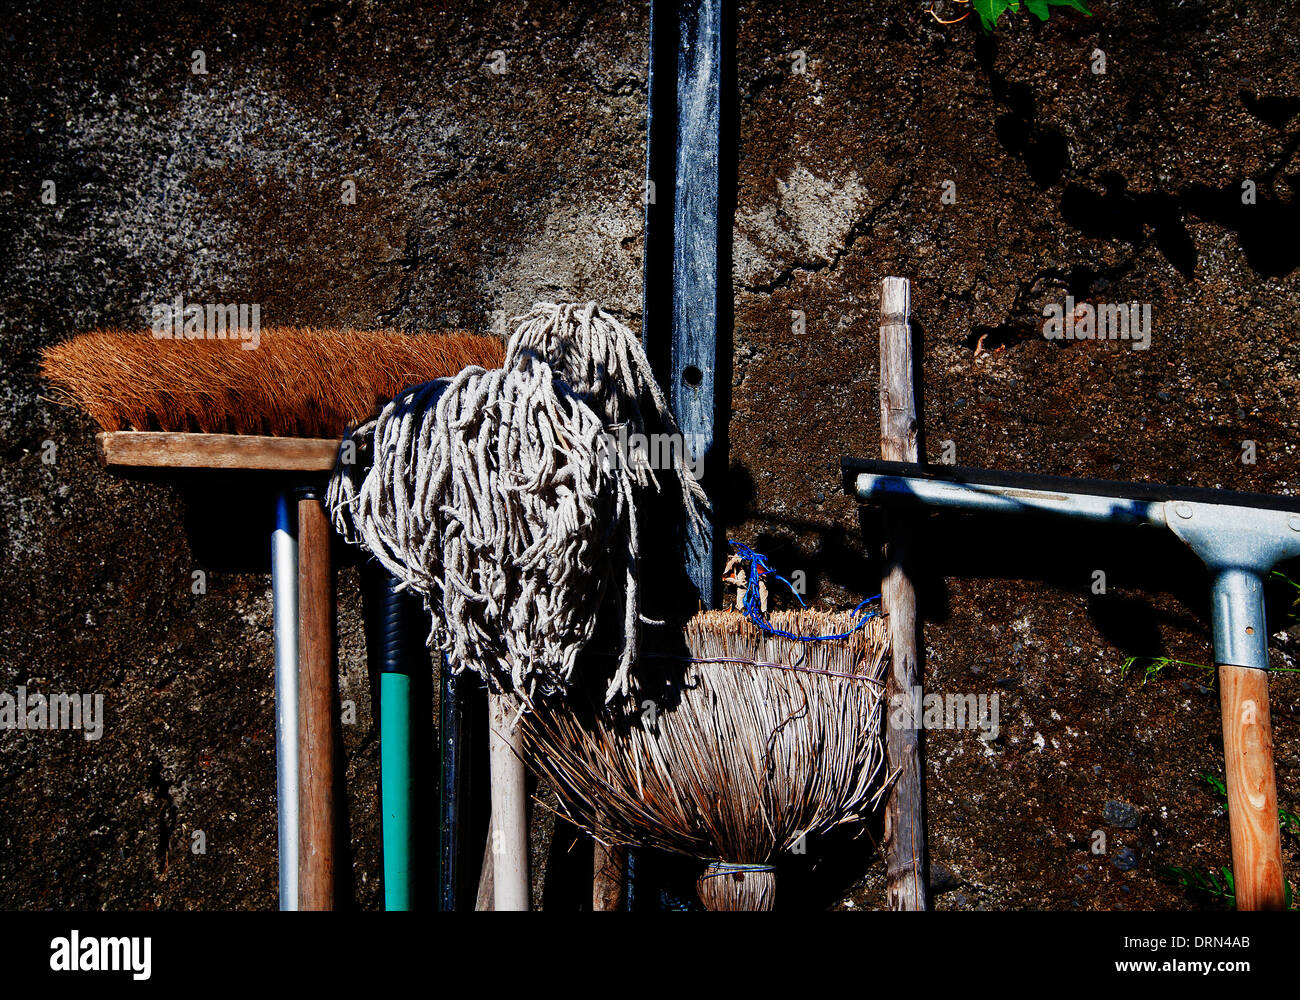 https://c8.alamy.com/comp/DRN4AB/brush-mop-broom-and-squeegee-against-a-wall-isle-de-la-runion-DRN4AB.jpg